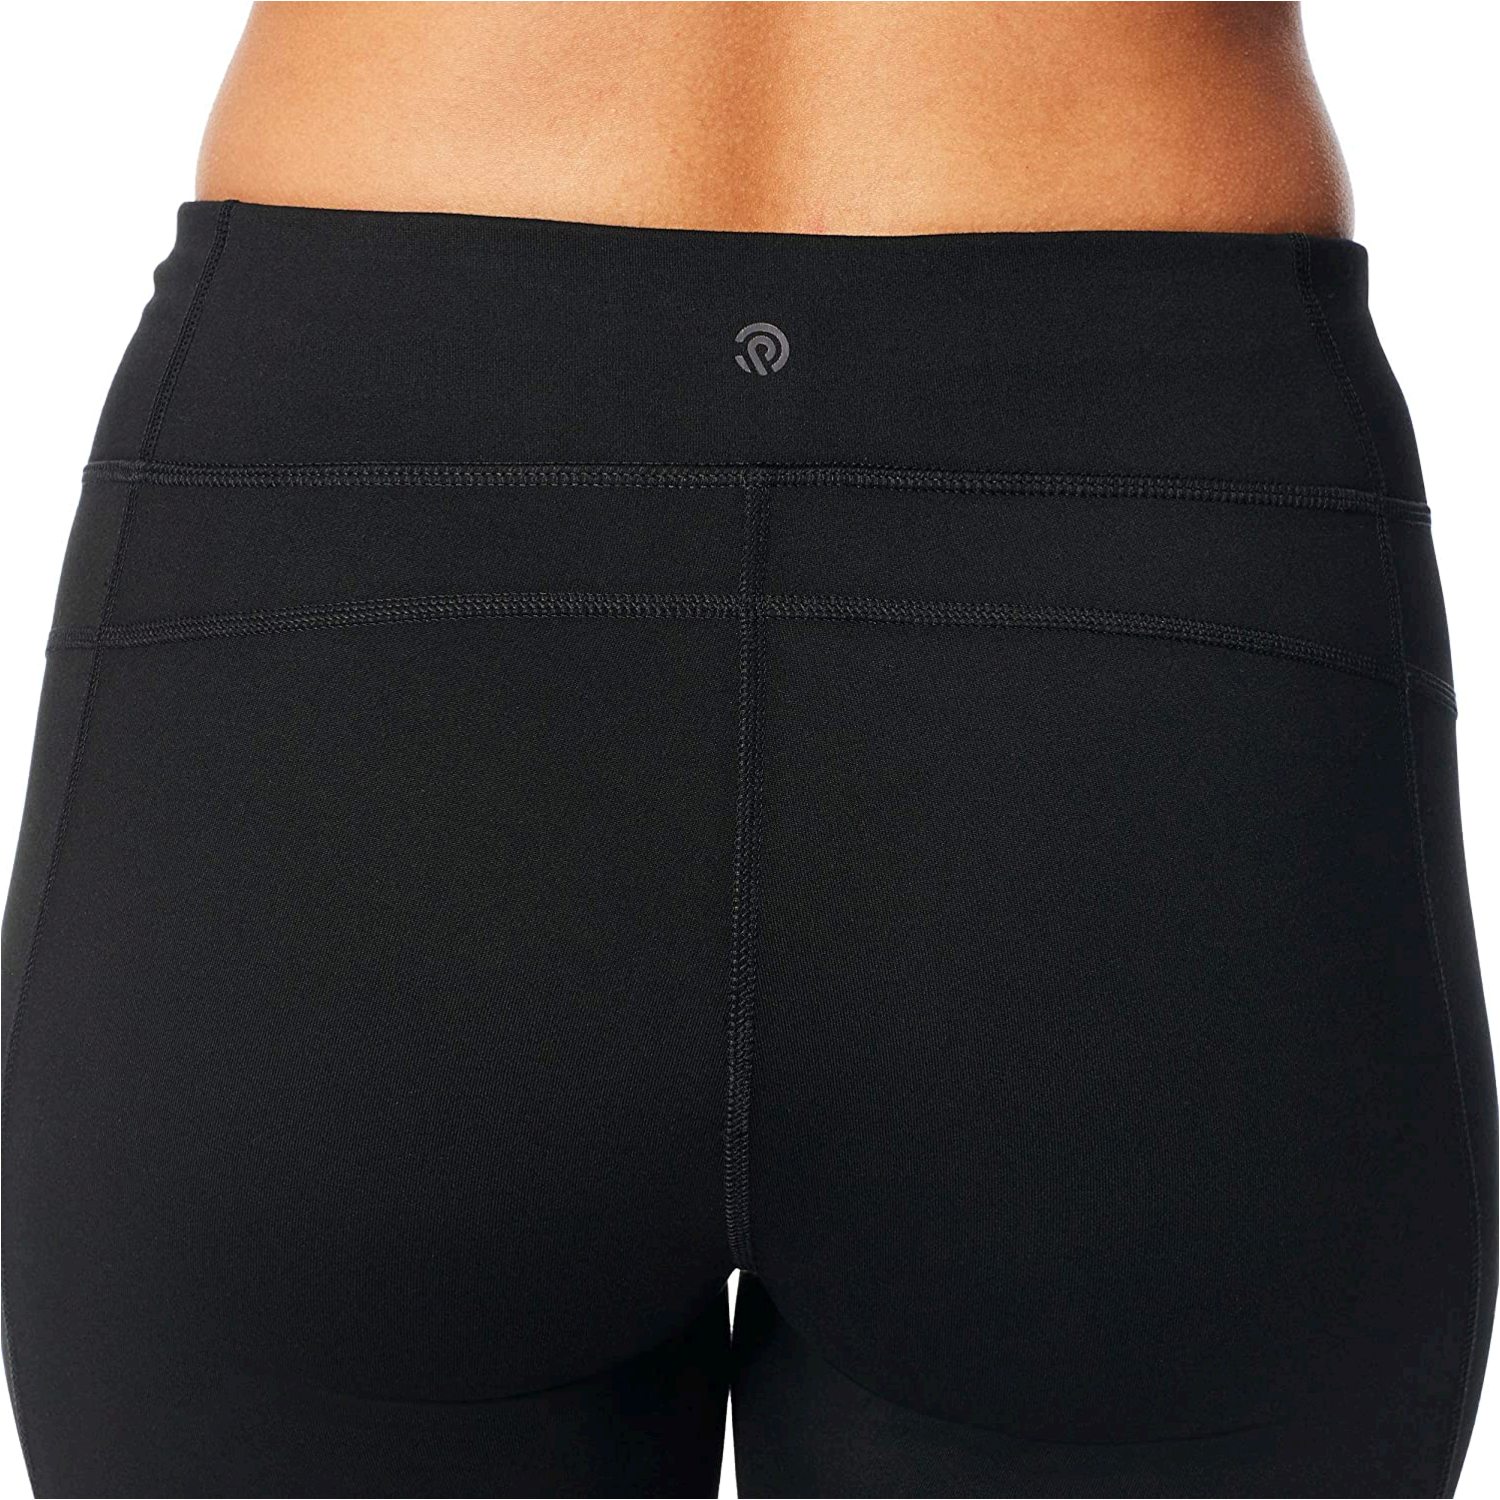 C9 Champion Women S Curvy Fit Yoga Pant Ebony Short Length Size Medium Mdei Ebay